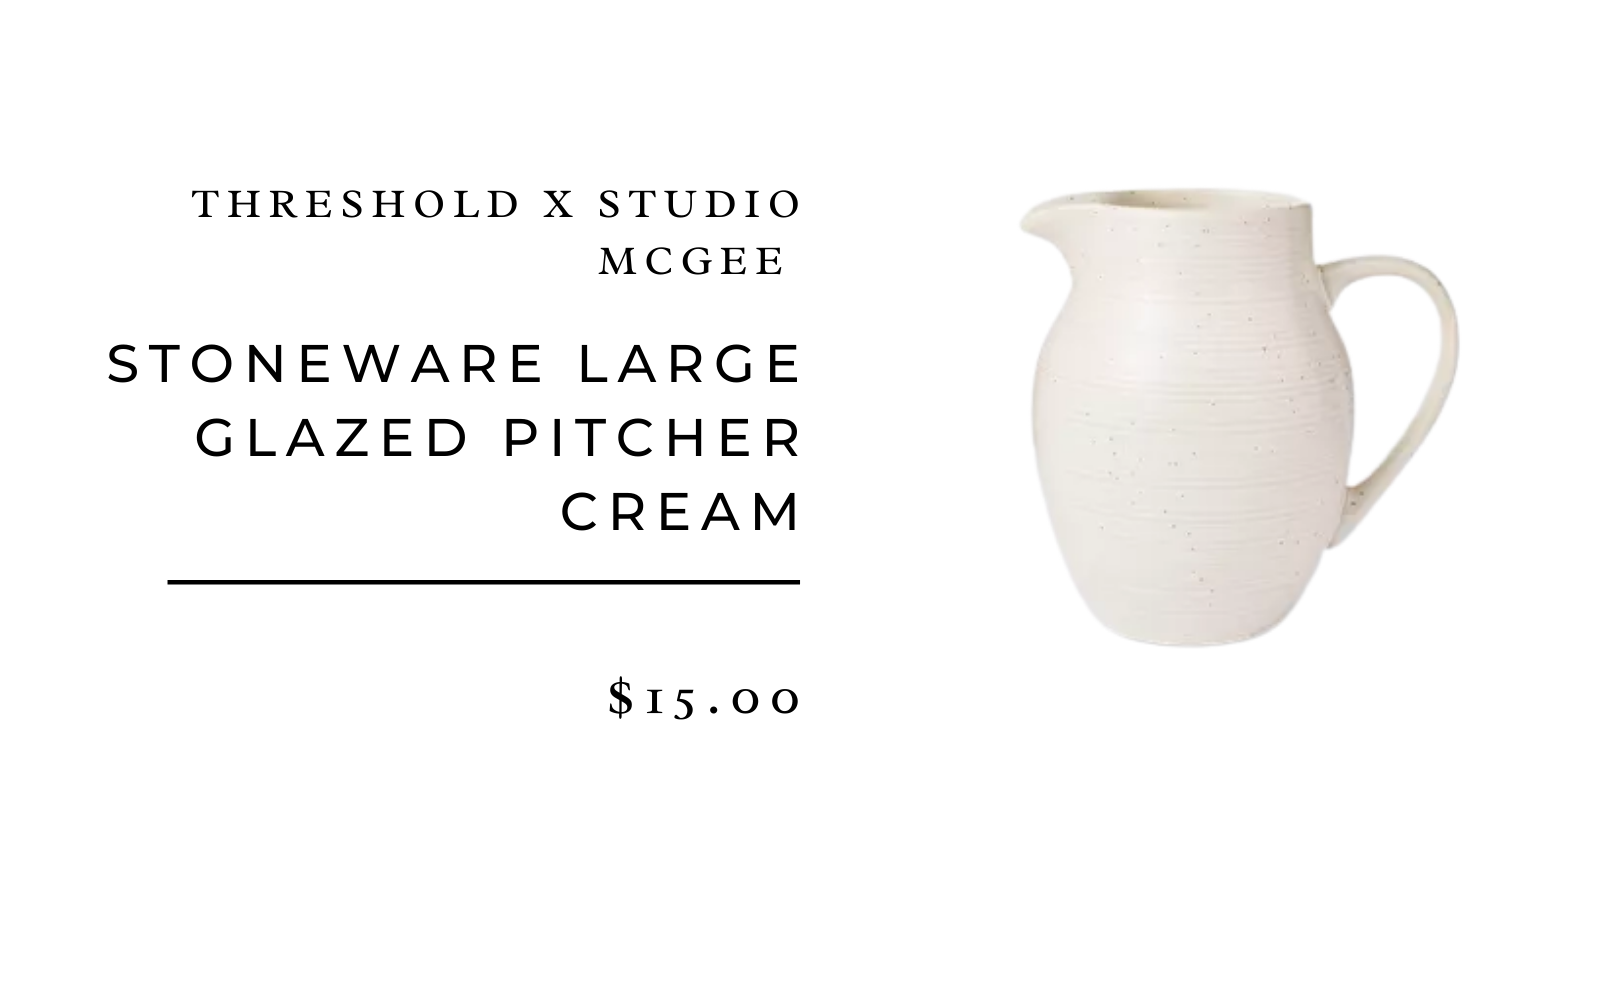 stoneware large glazed pitcher cream-simple place setting ideas